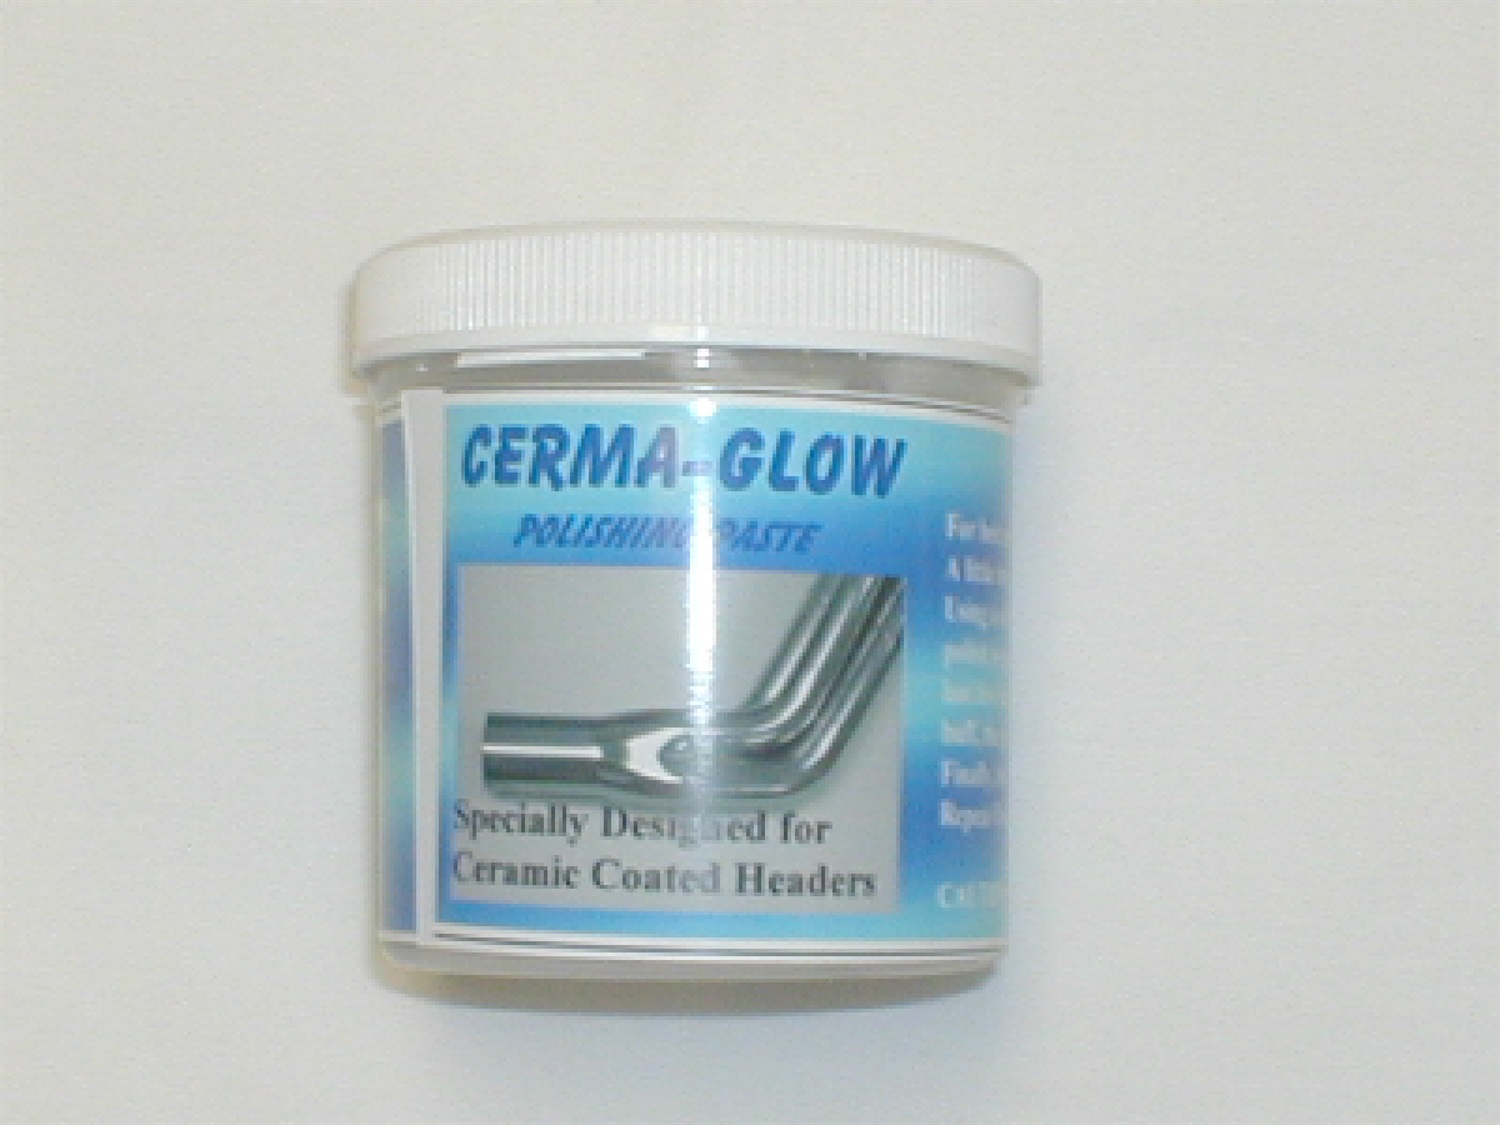 Car Chemistry Car Chemistry CGHP6 Cerma-Glow; Ceramic Header Polish